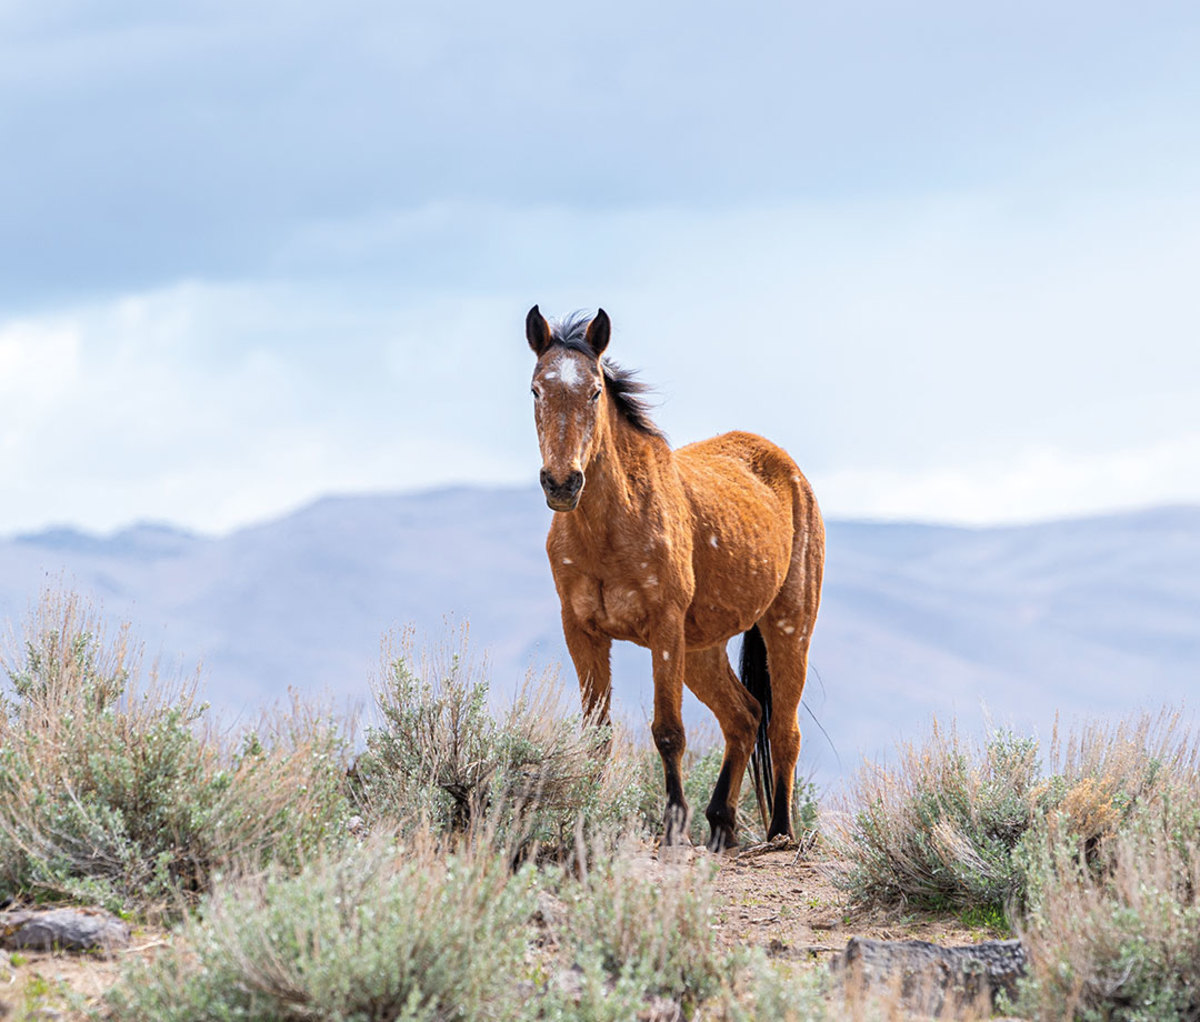 Feral horse roaming the Southwest's grassy plains